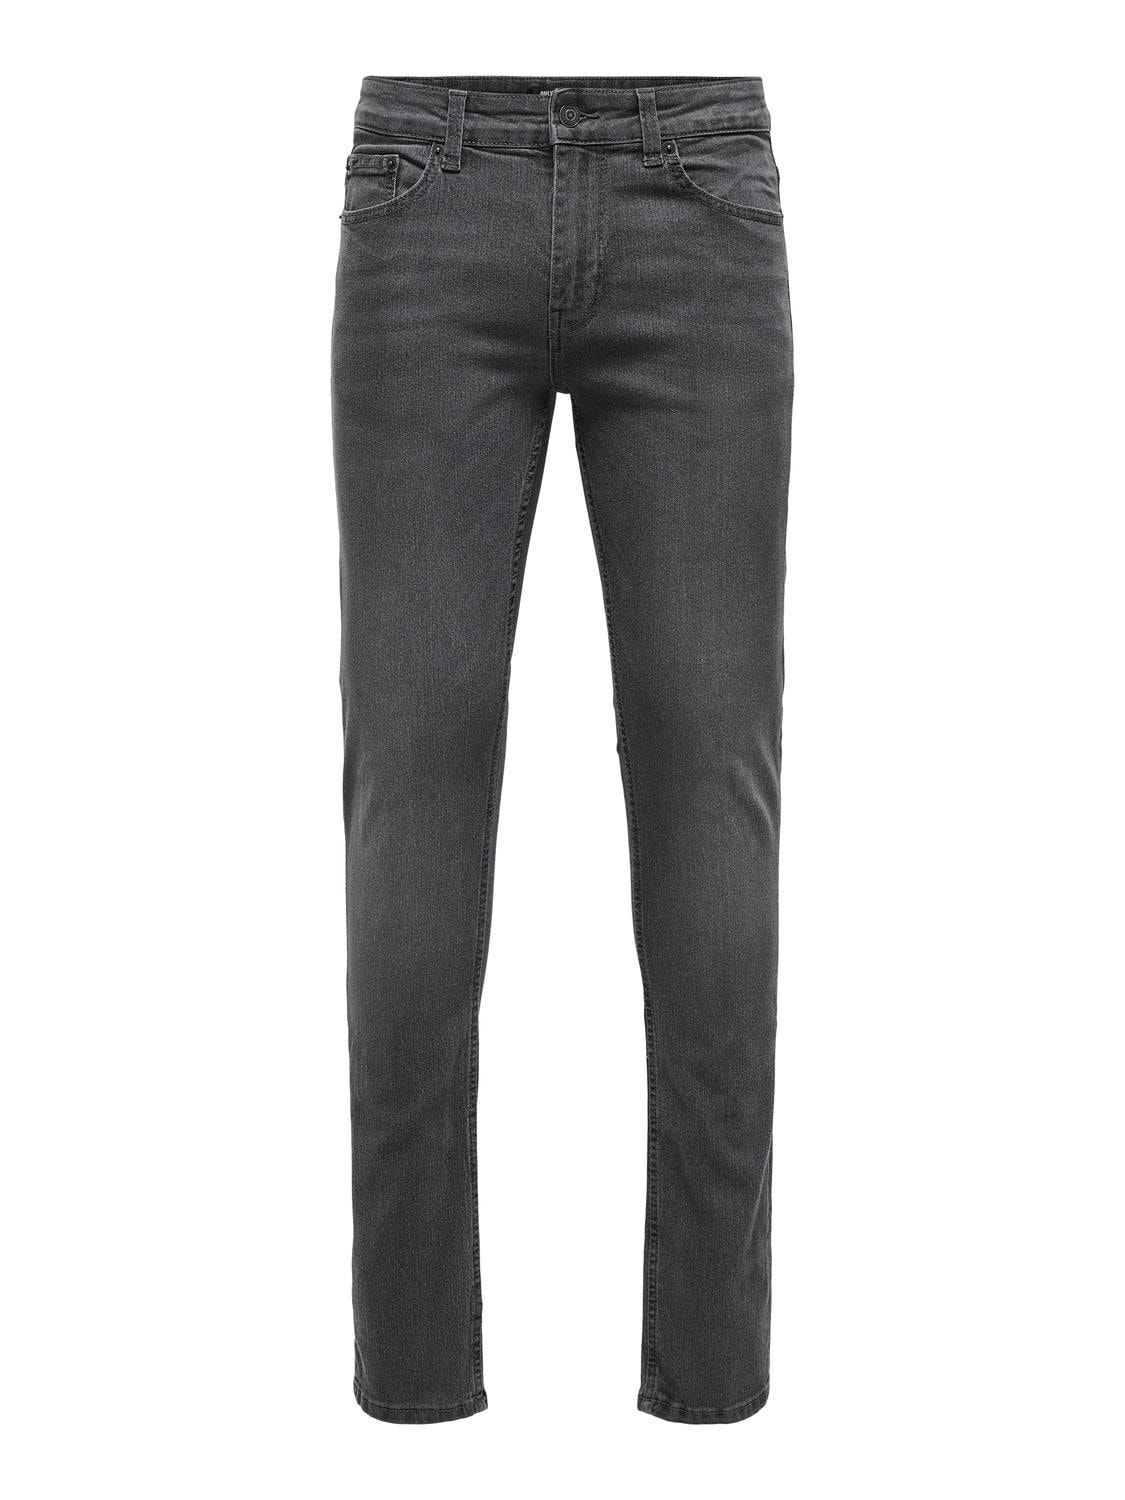 ONLY & SONS ONSLoom Slim Grey Jeans -Grey Denim - 22027842